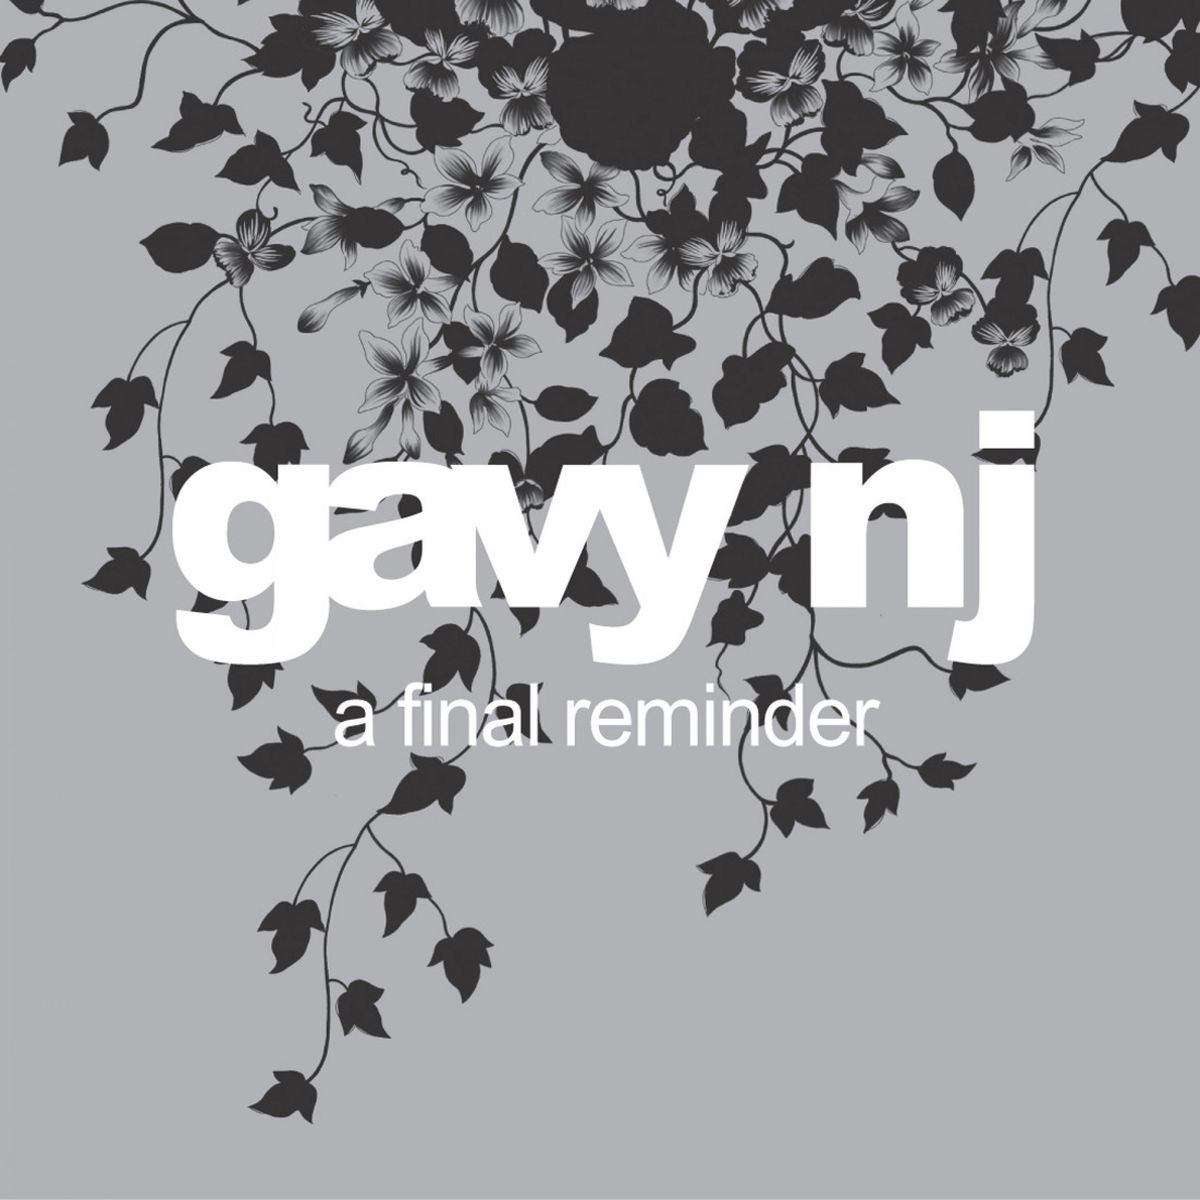 gavy nj – A Final Reminder